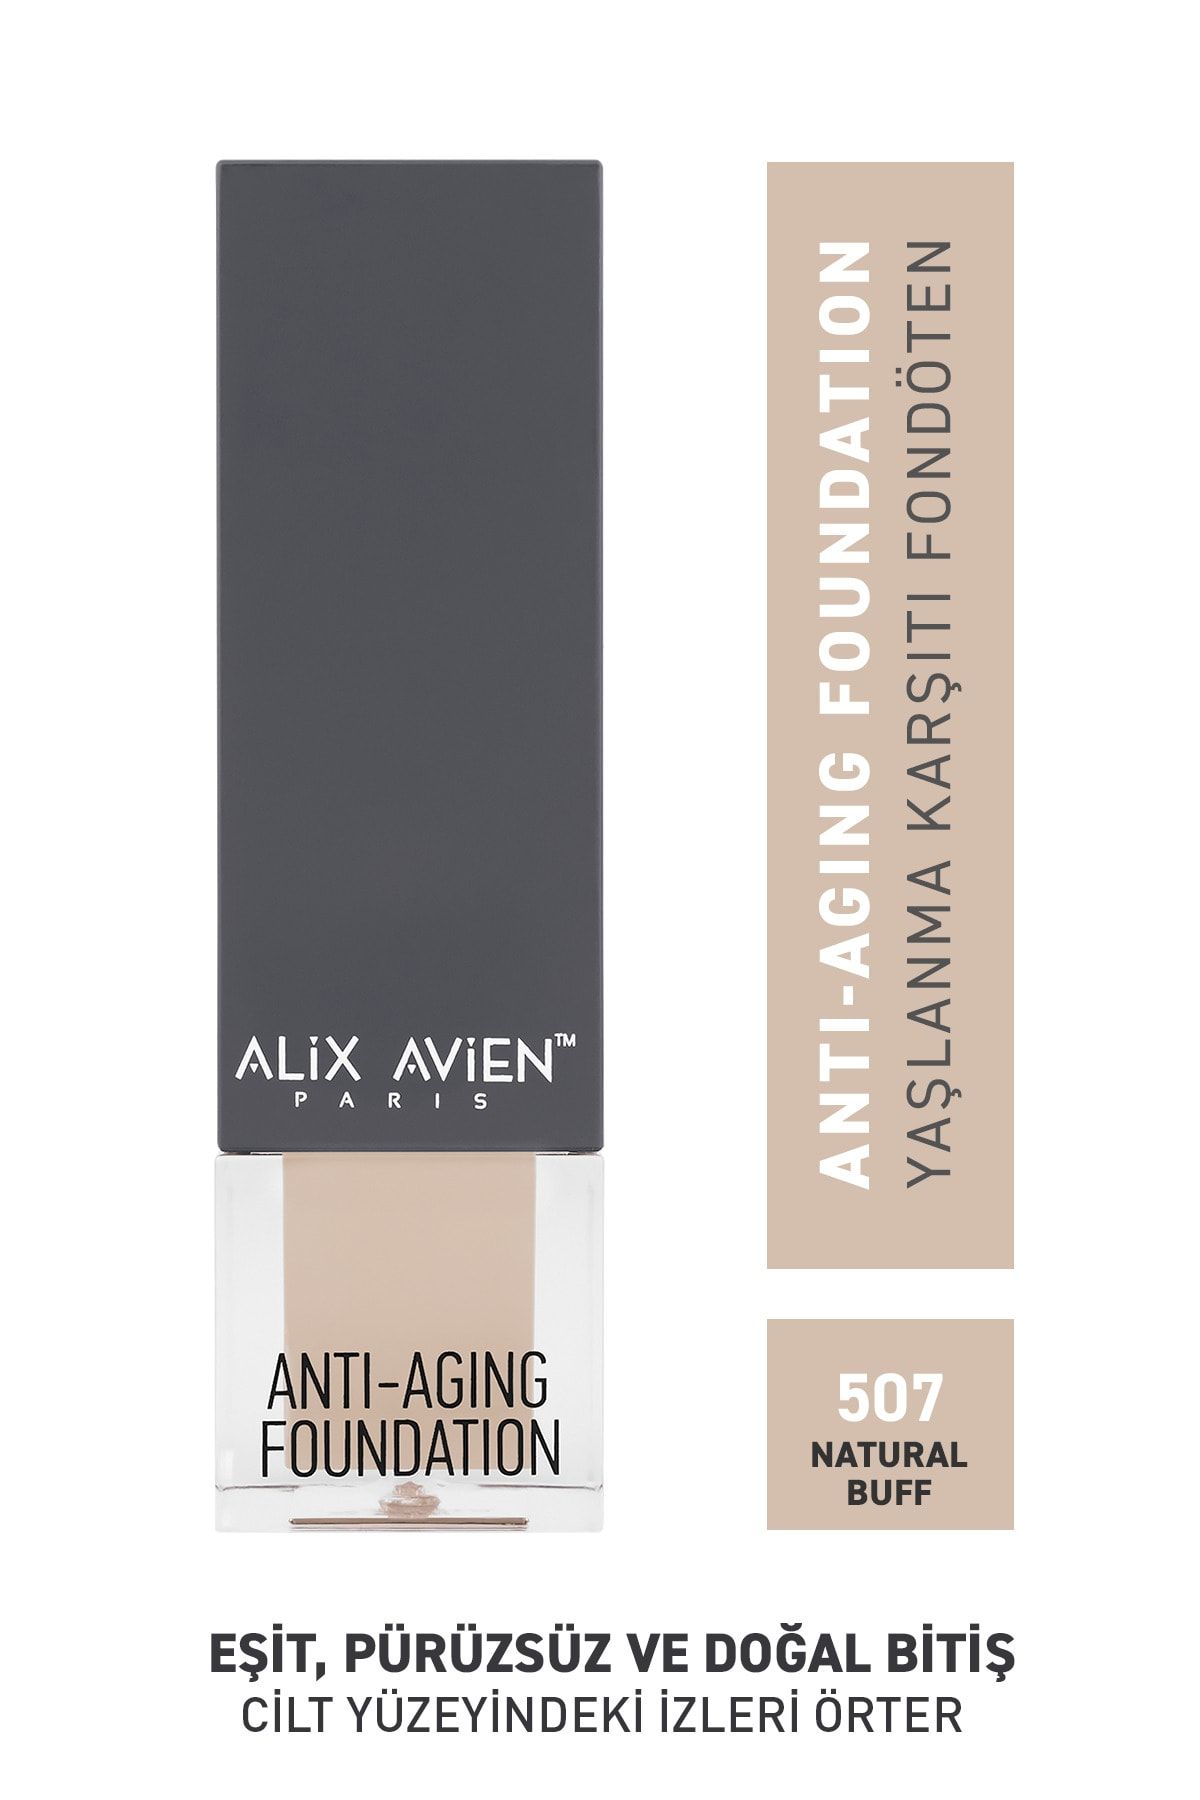 Alix Avien Yaşlanma Karşıtı Fondöten 507 Natural Buff Spf 15 Anti Aging Foundation - 35 ml